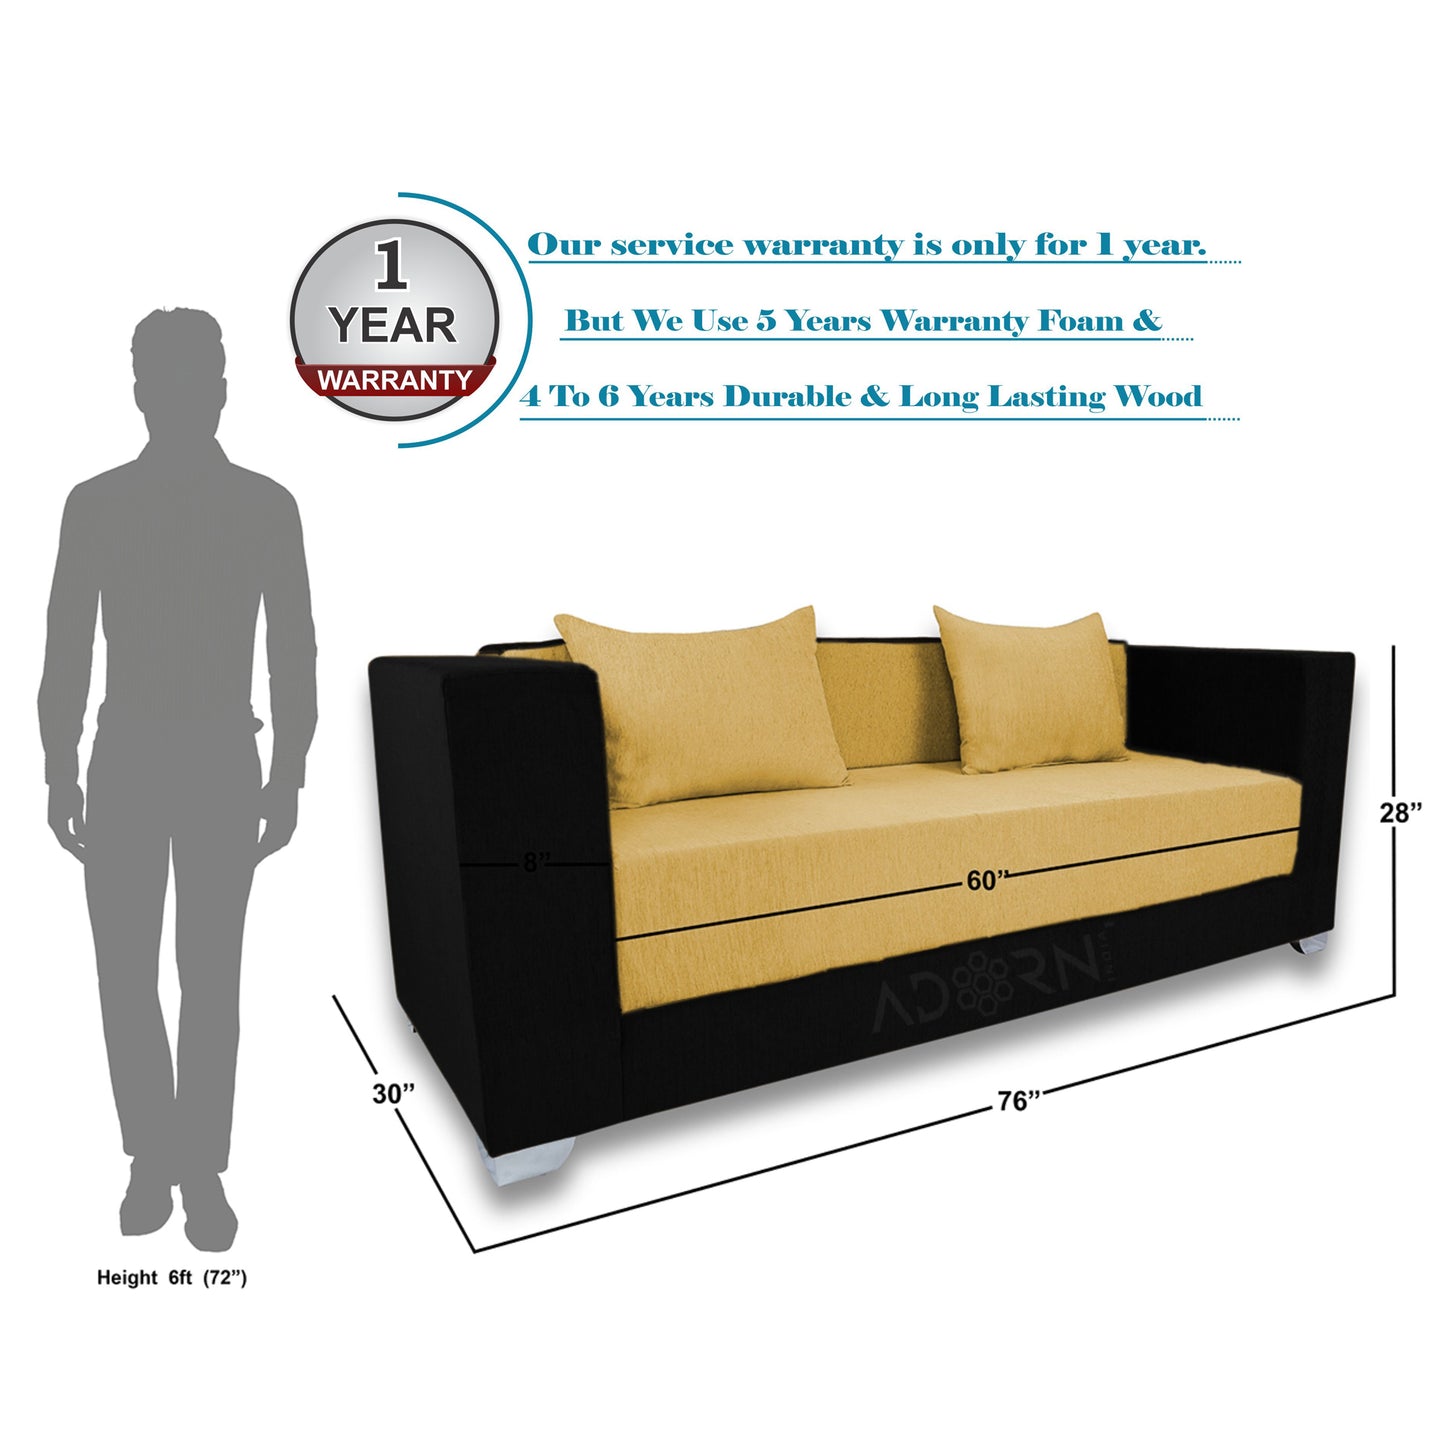 Adorn India Almond 3 Seater Sofa cumbed (Yellow & Black)